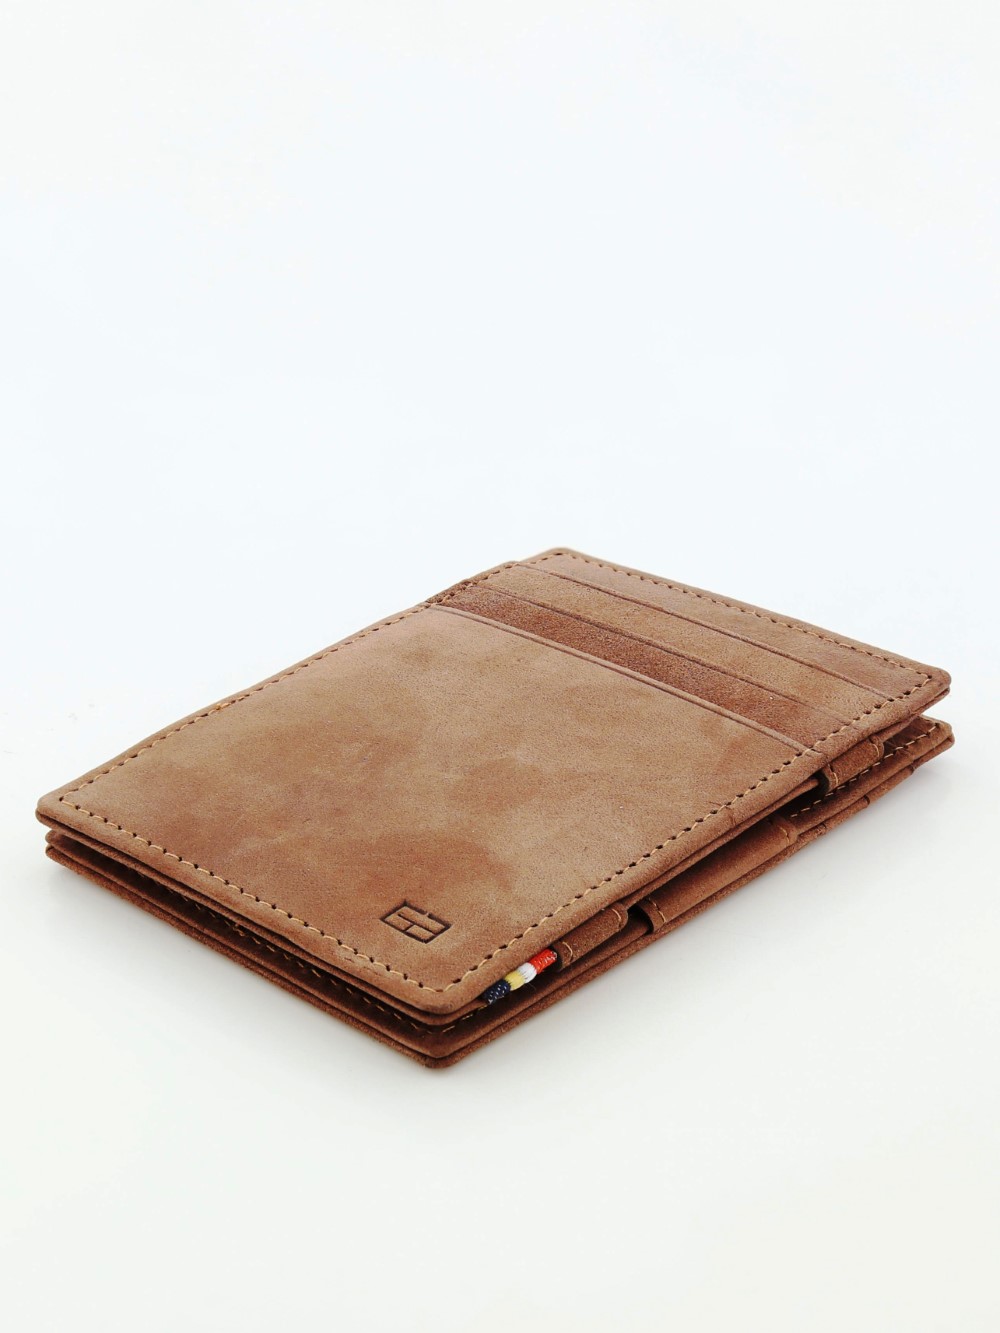 Garzini Essenziale Magic Wallet Vintage Java Brown Wallet